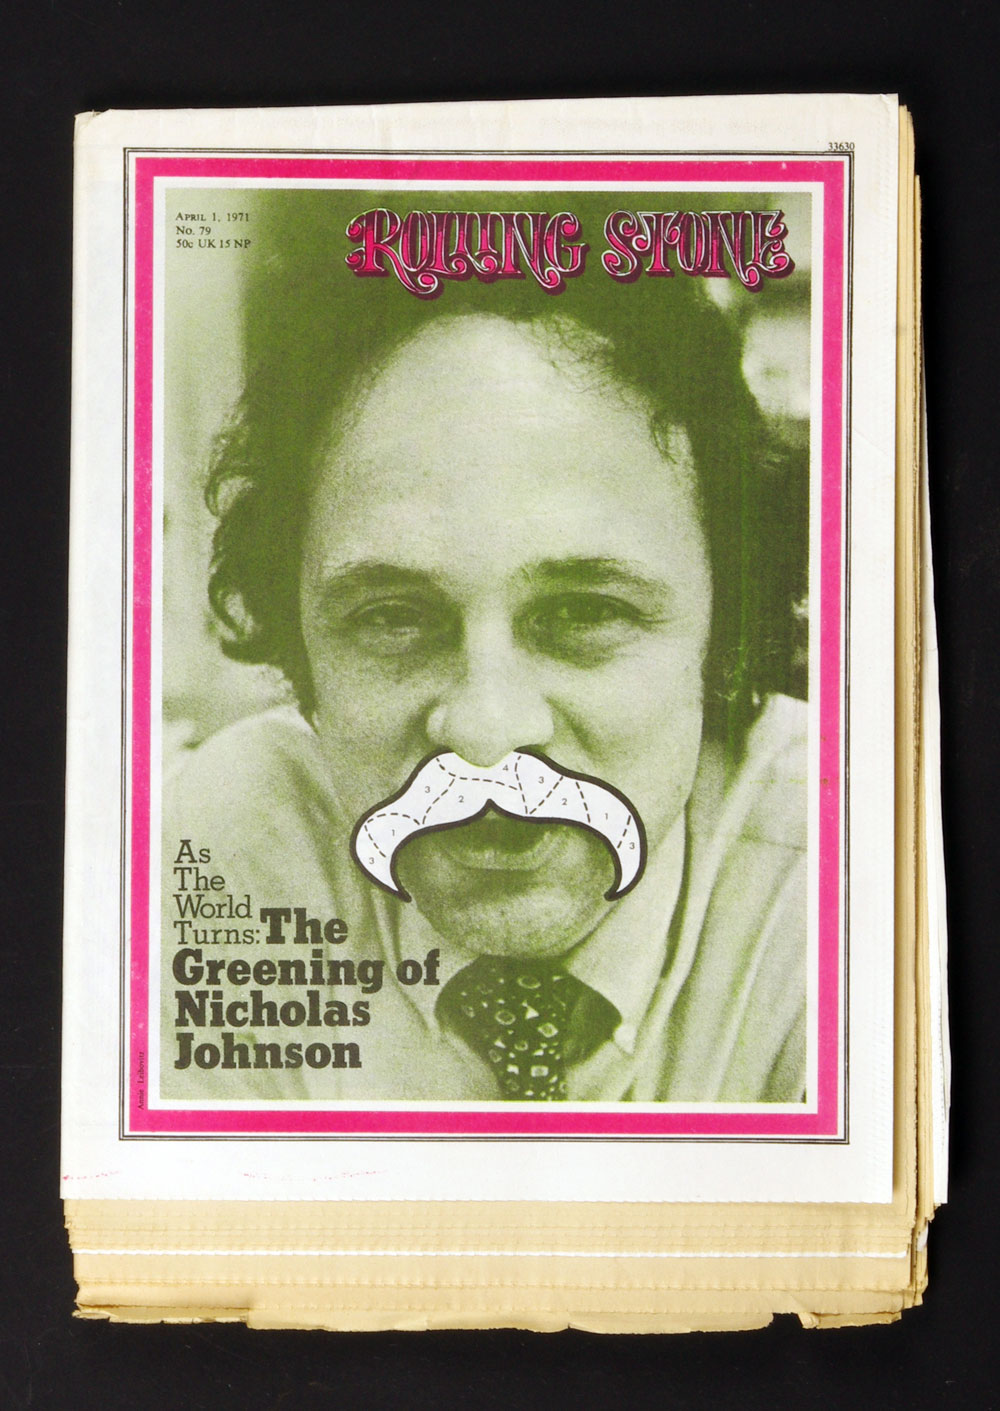 Rolling Stone Magazine Back Issue 1971 Apr 1 No. 79 Nicolas Johnson 